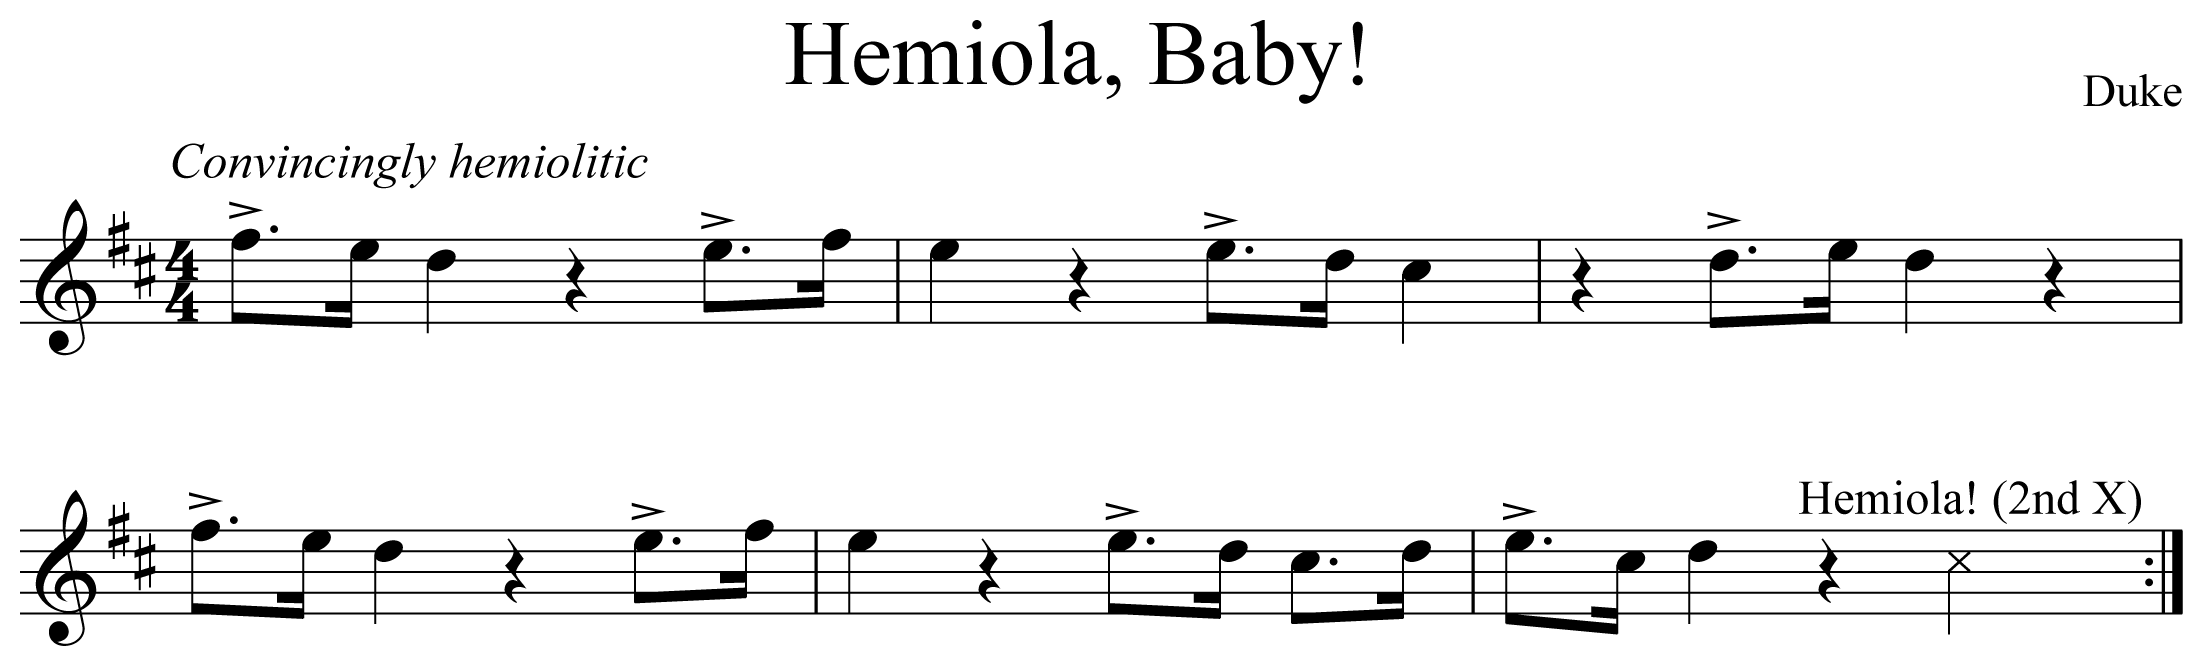 Hemiola, Baby! Notation Saxophone